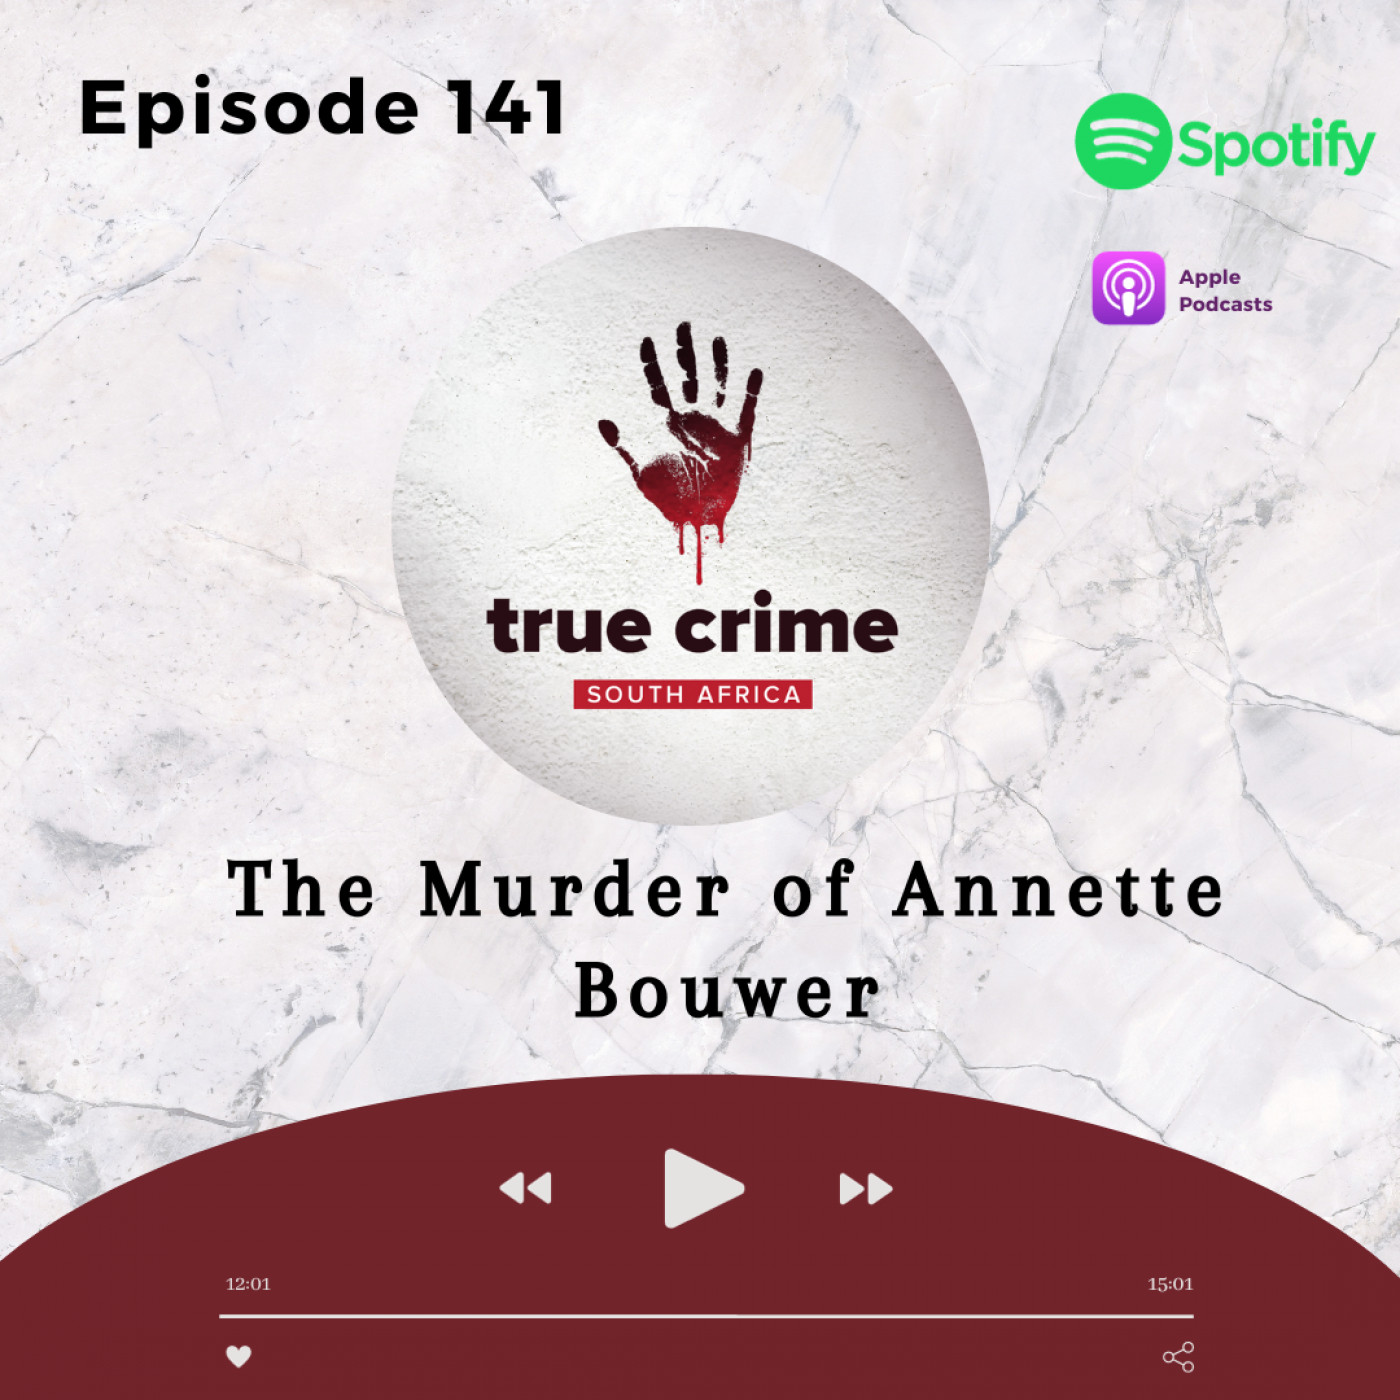 Episode 141 The Murder of Annette Bouwer